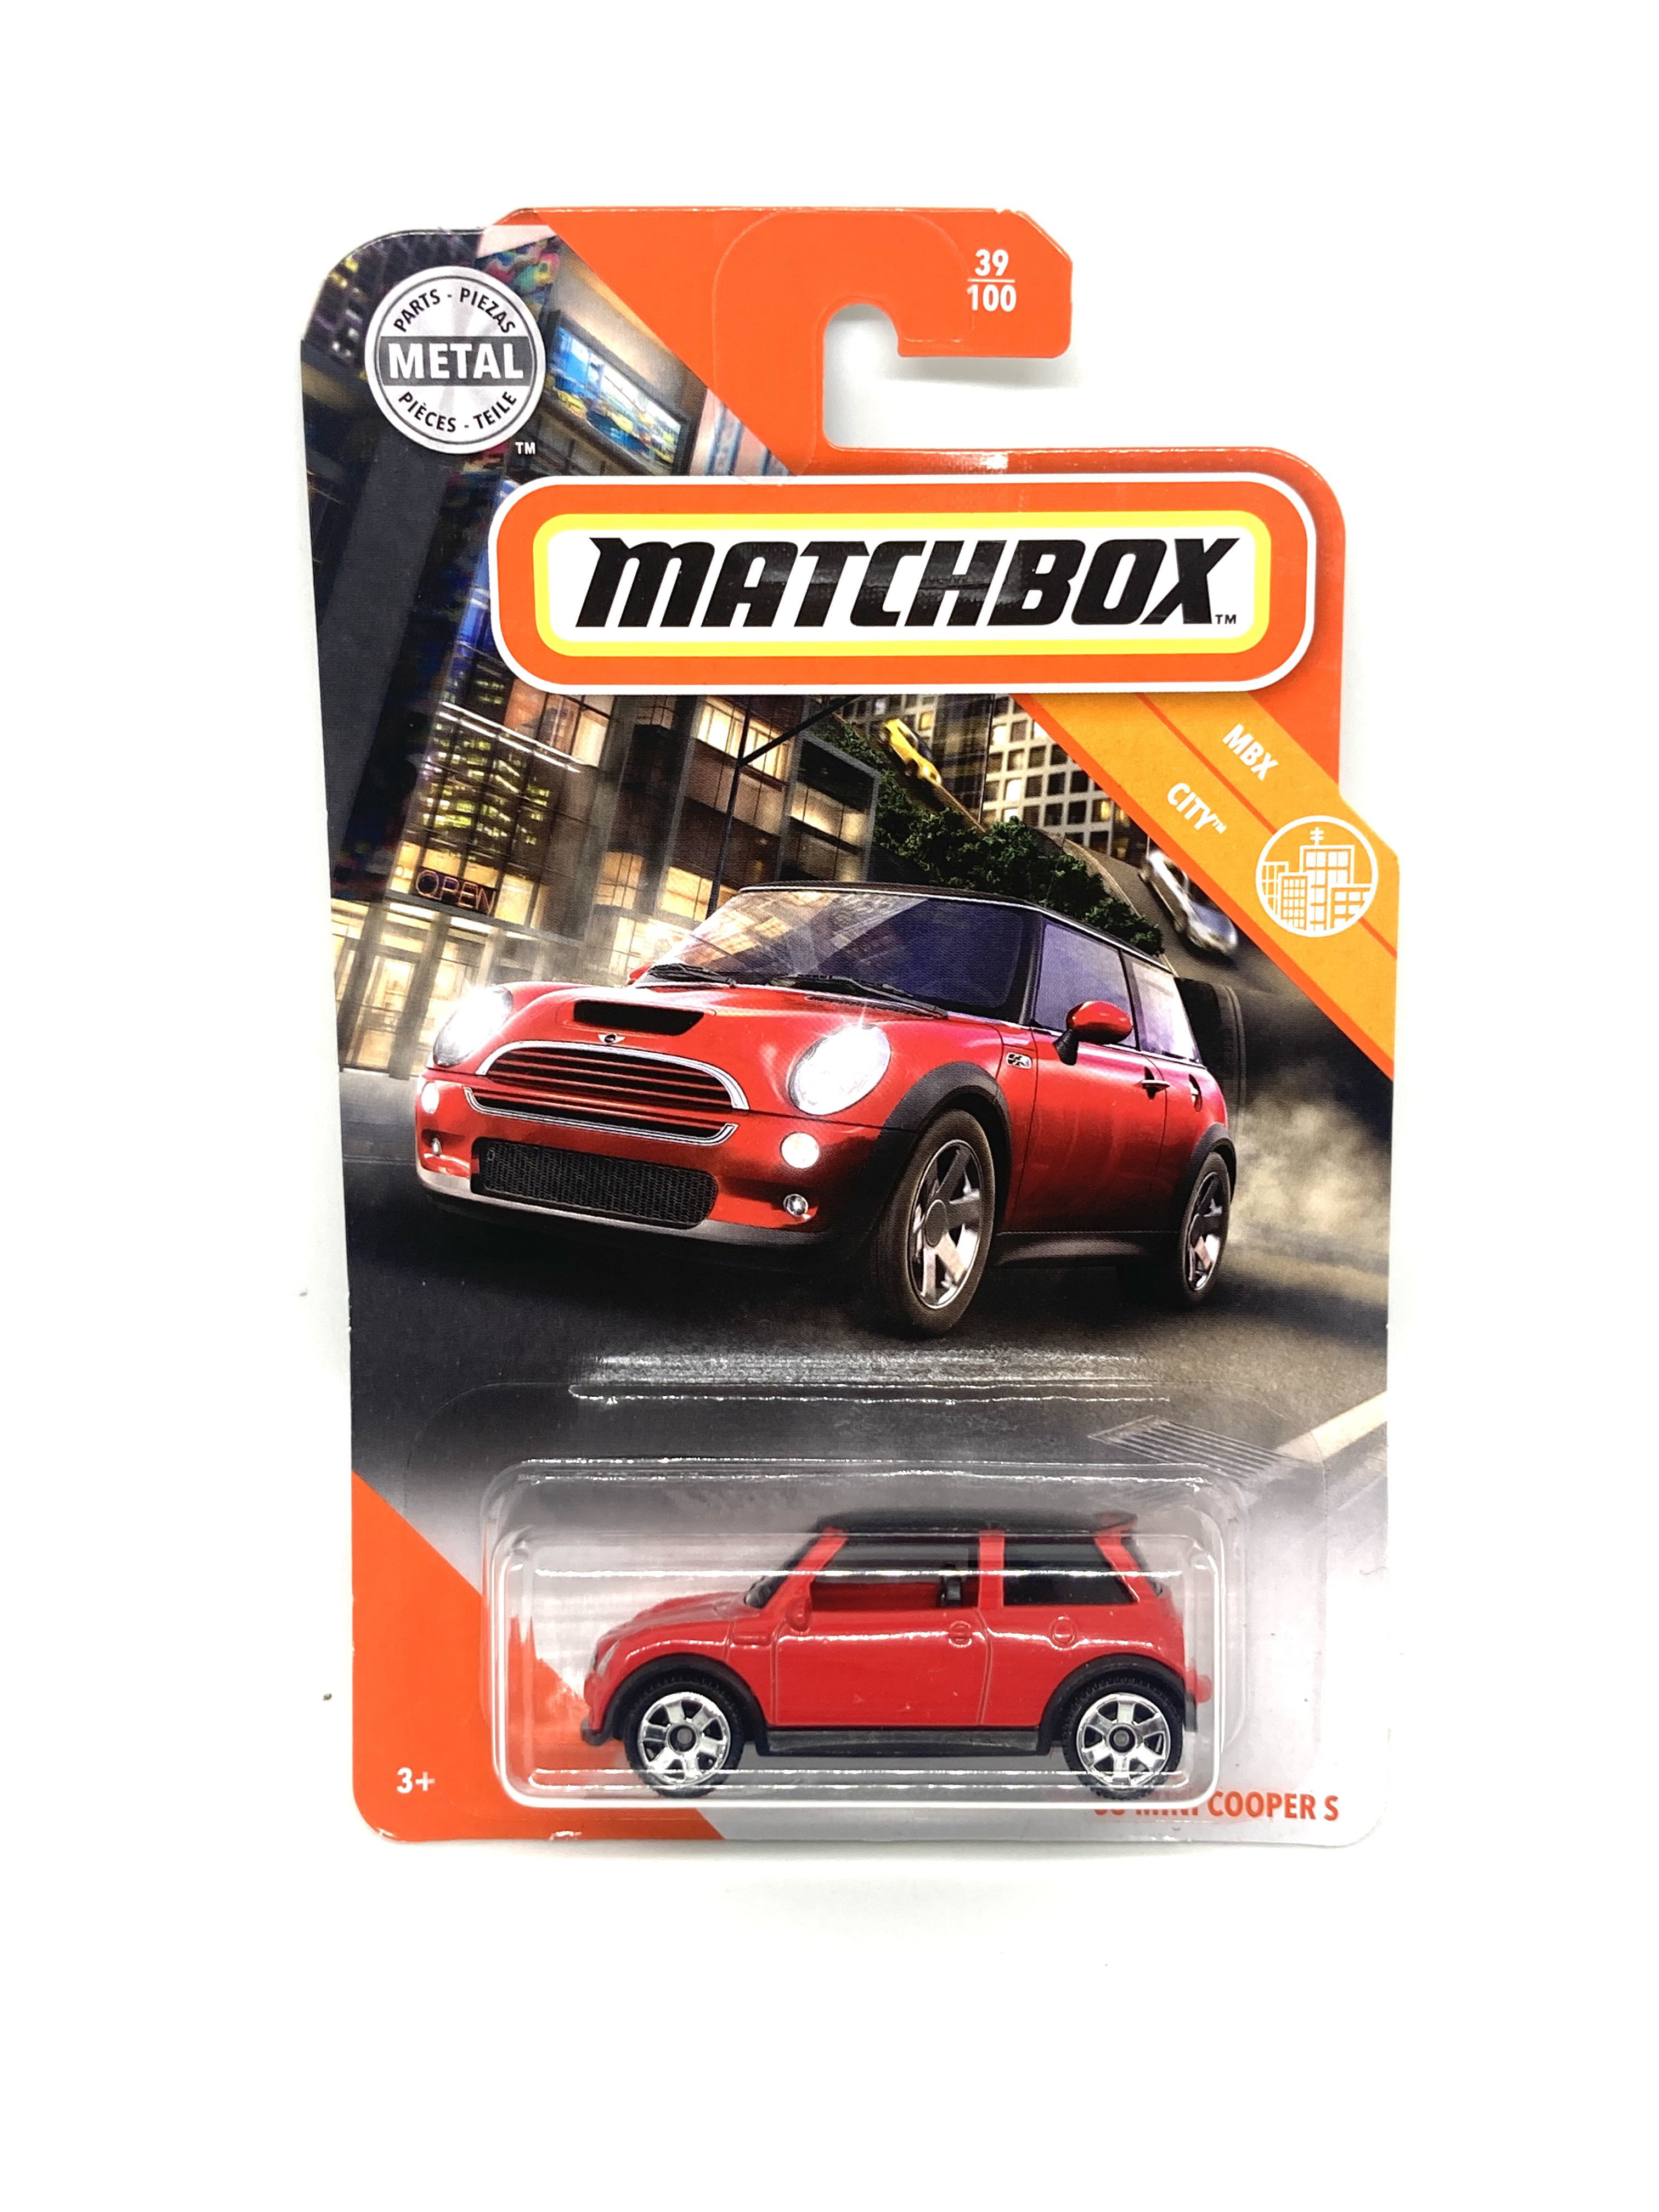 '03 Mini Cooper S Matchbox MBX City 39/100 2019 Mattel Nuevo